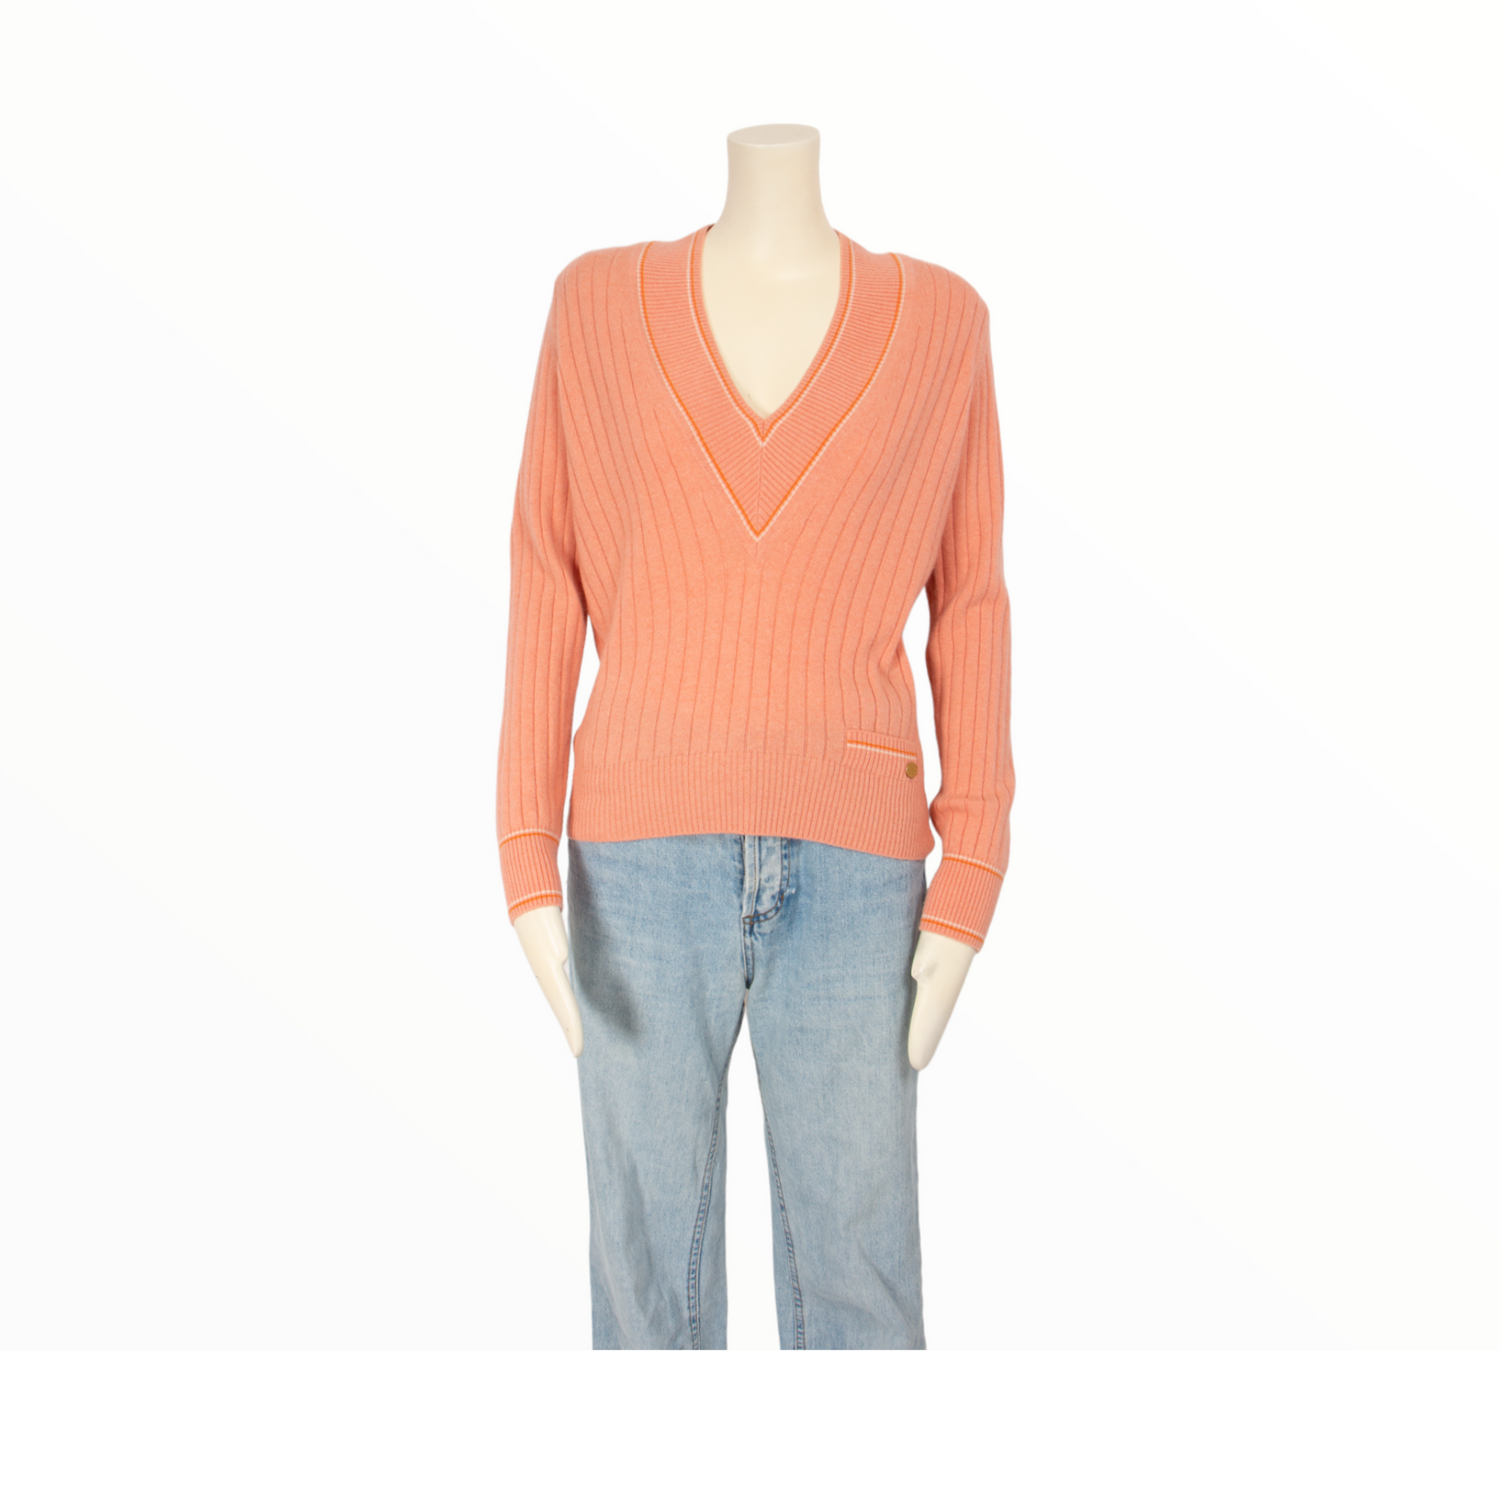 Chanel vintage pink orange cashmere jumper - S - 2000s second hand Lysis